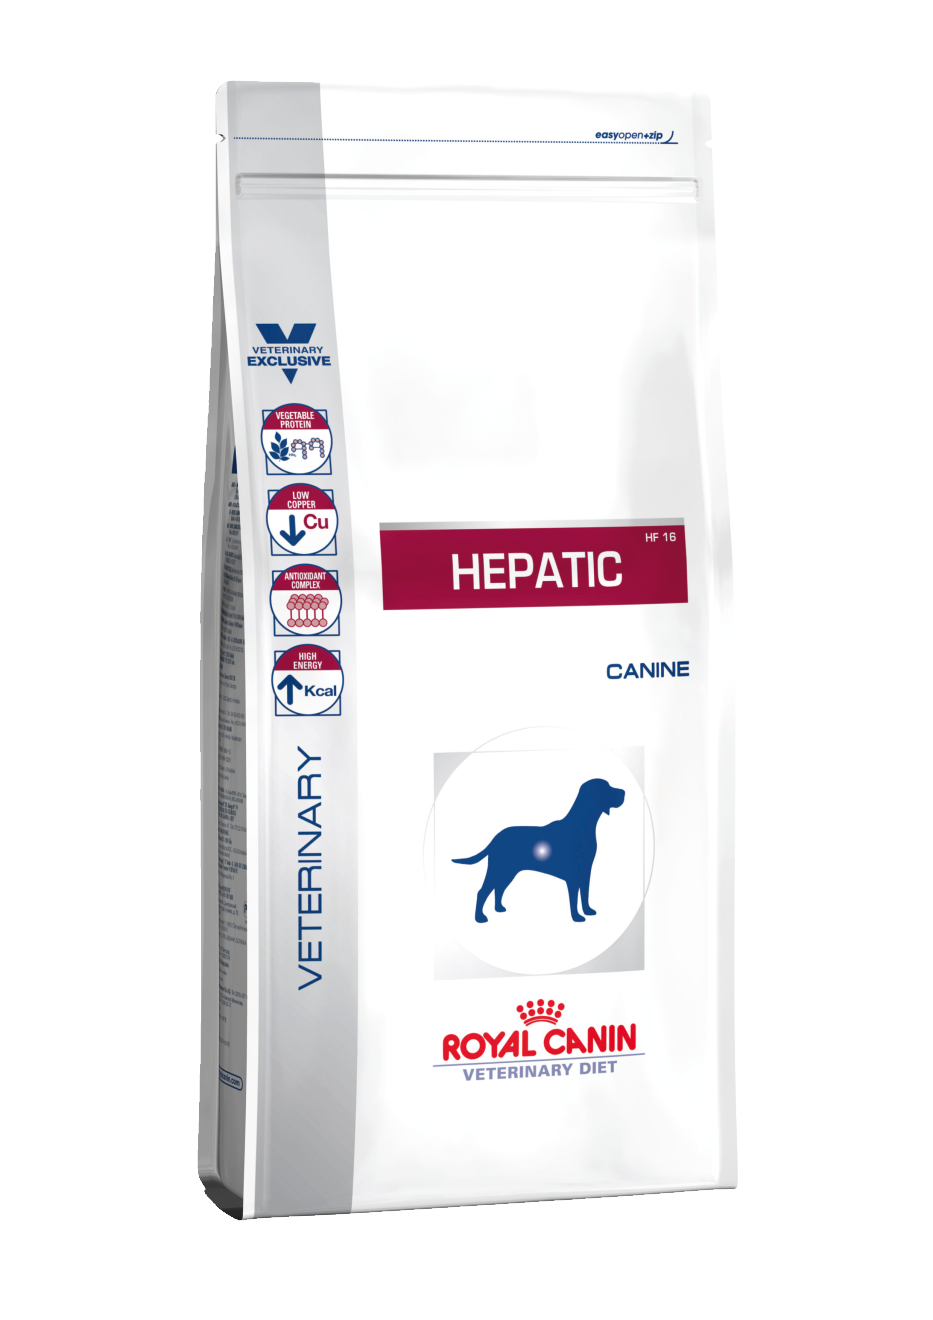 royal canin hepatic 10 kg